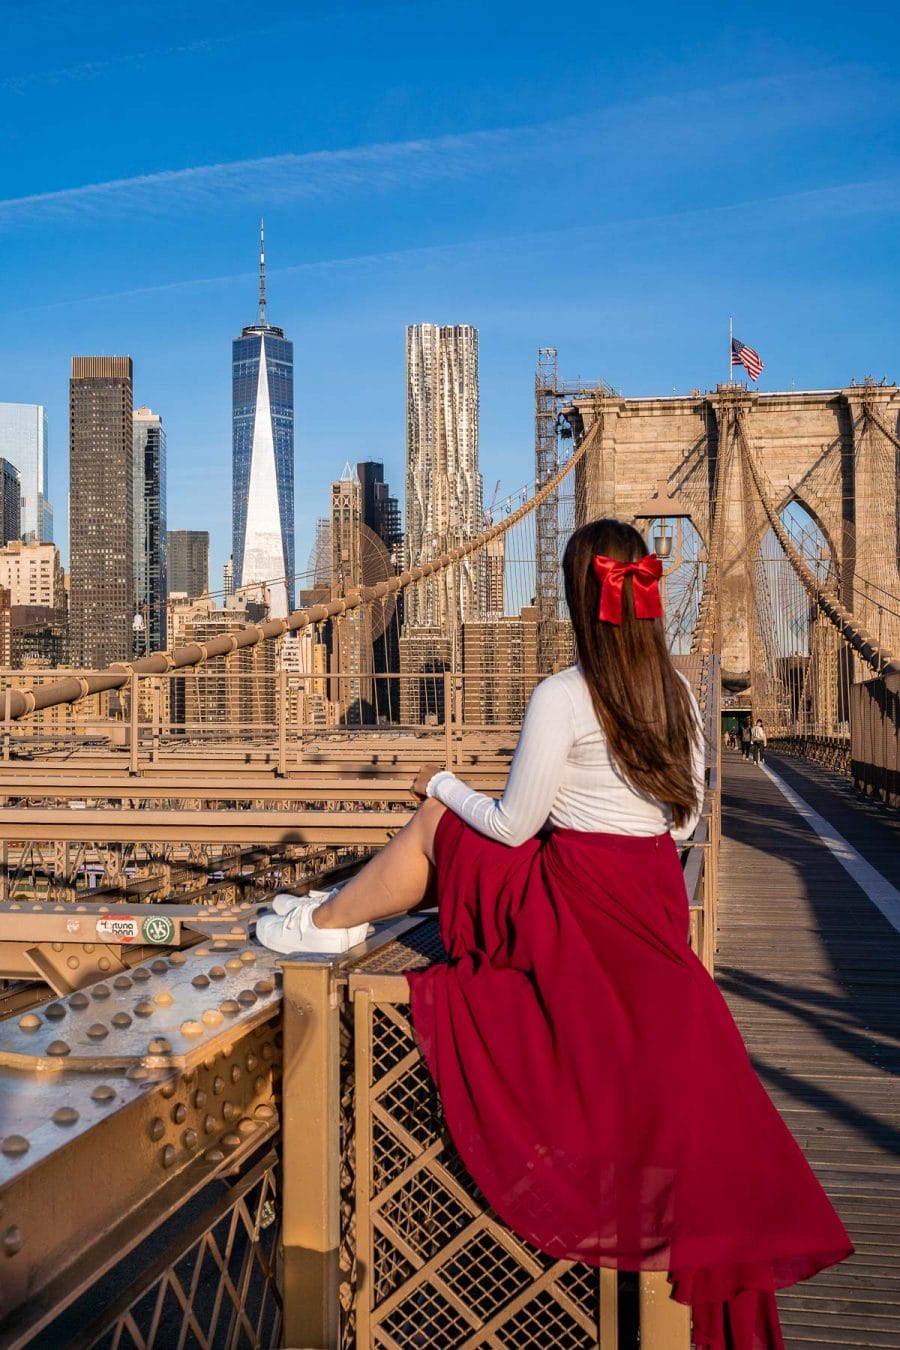 Girl in red skirt on Brooklyn Bridge in New York